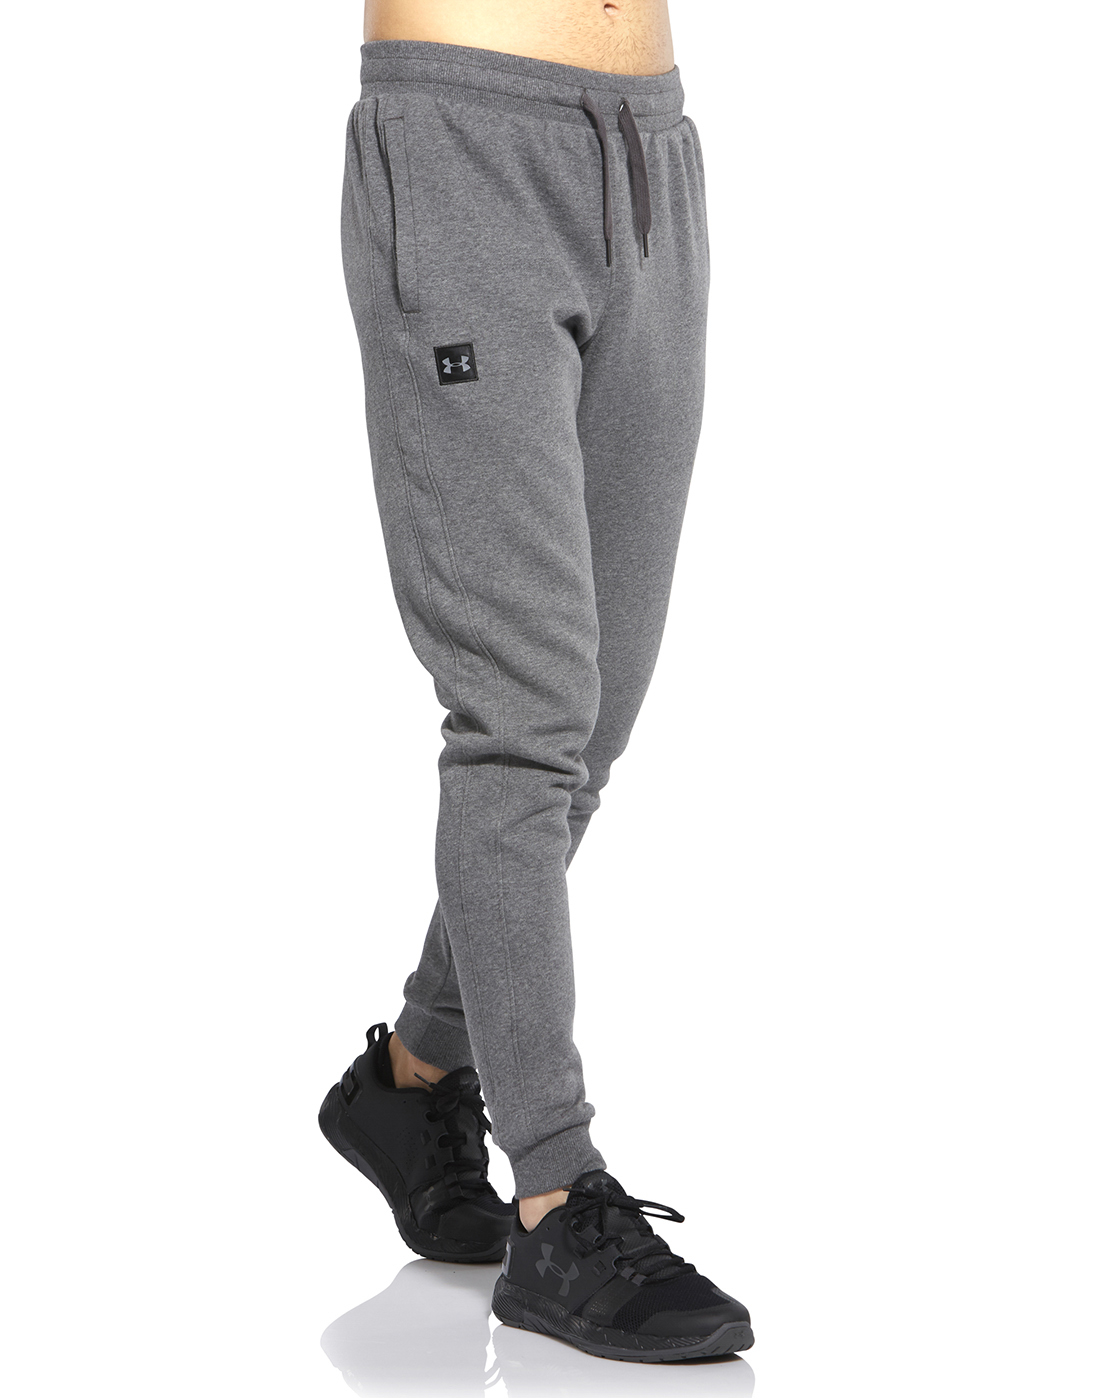 Men's Grey Under Armour Fleece Gym Sweatpants | Life Style Sports